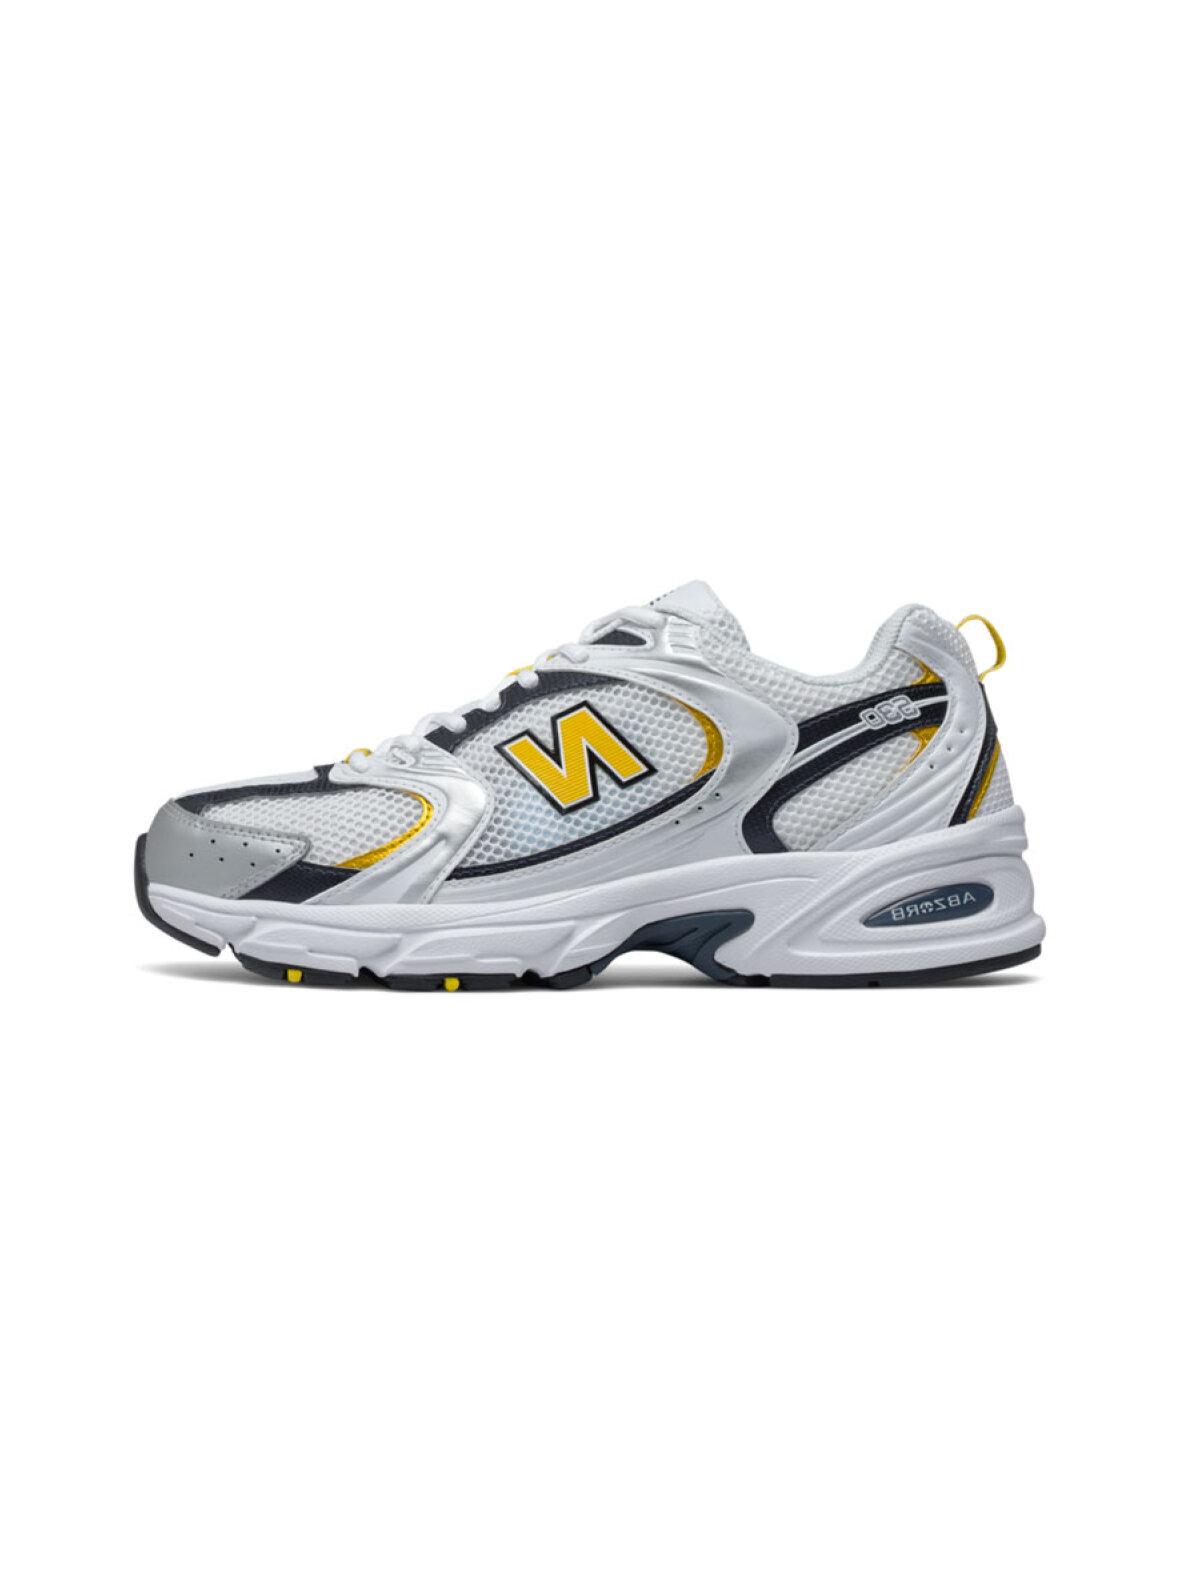 A'POKE - New Balance Sneakers White Citra Yellow